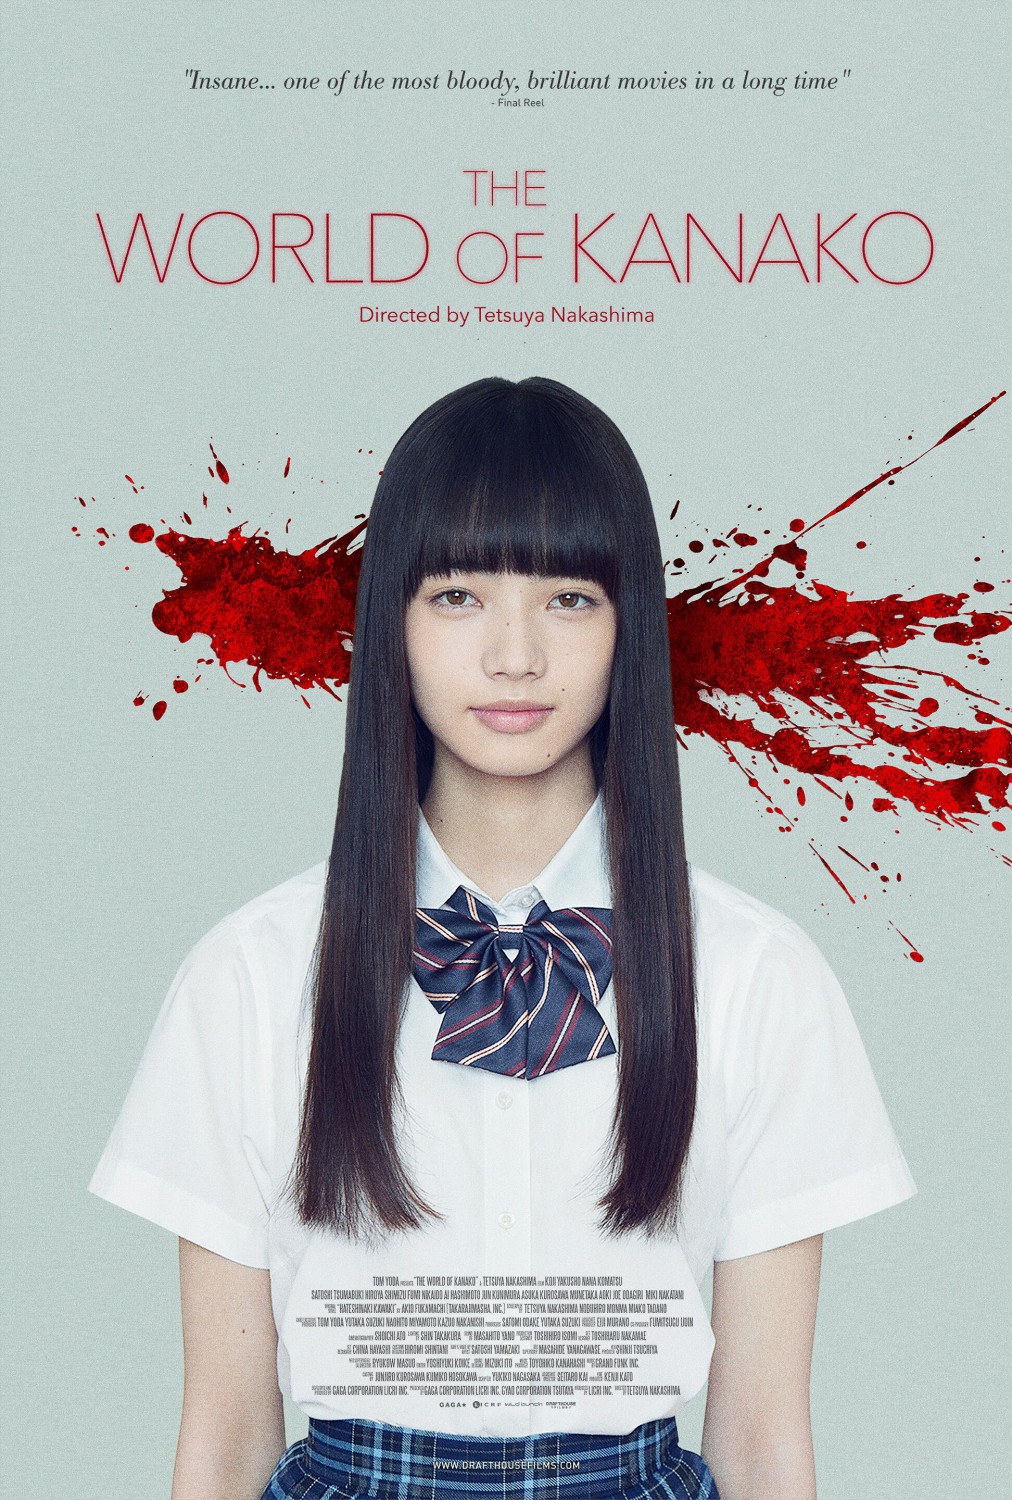 Extra Large Movie Poster Image for Kawaki (#2 of 2)